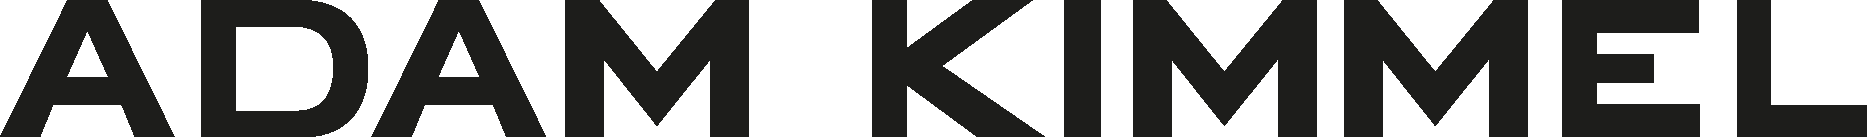 Adam Kimmel Logo Vector